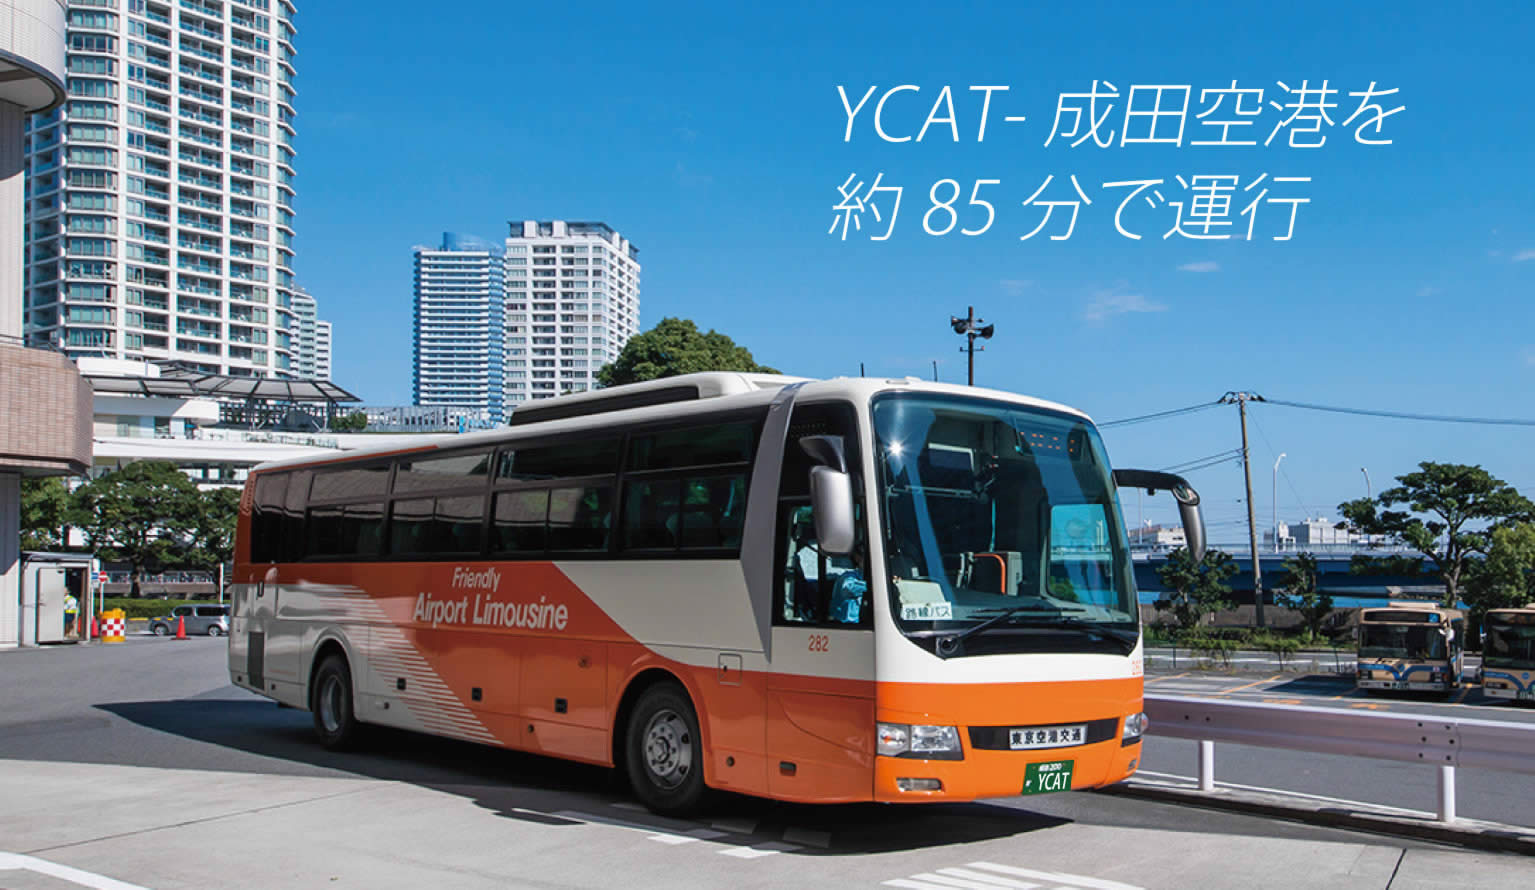 Ycat ワイキャット 横浜シティ エア ターミナル Yokohama City Air Terminal